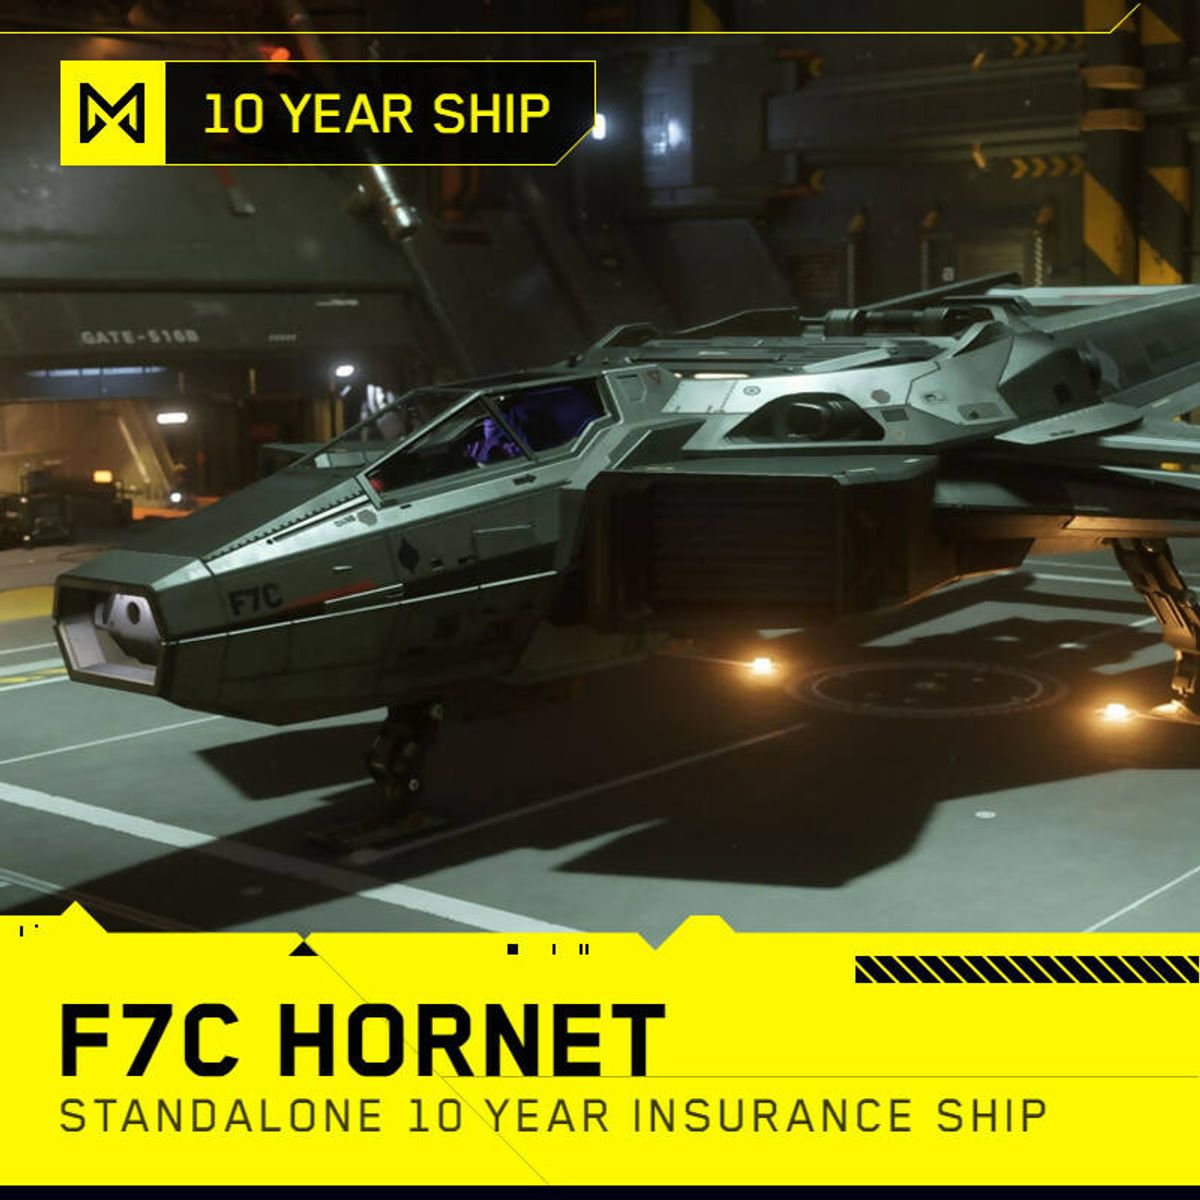 F7C Hornet - 10 Year